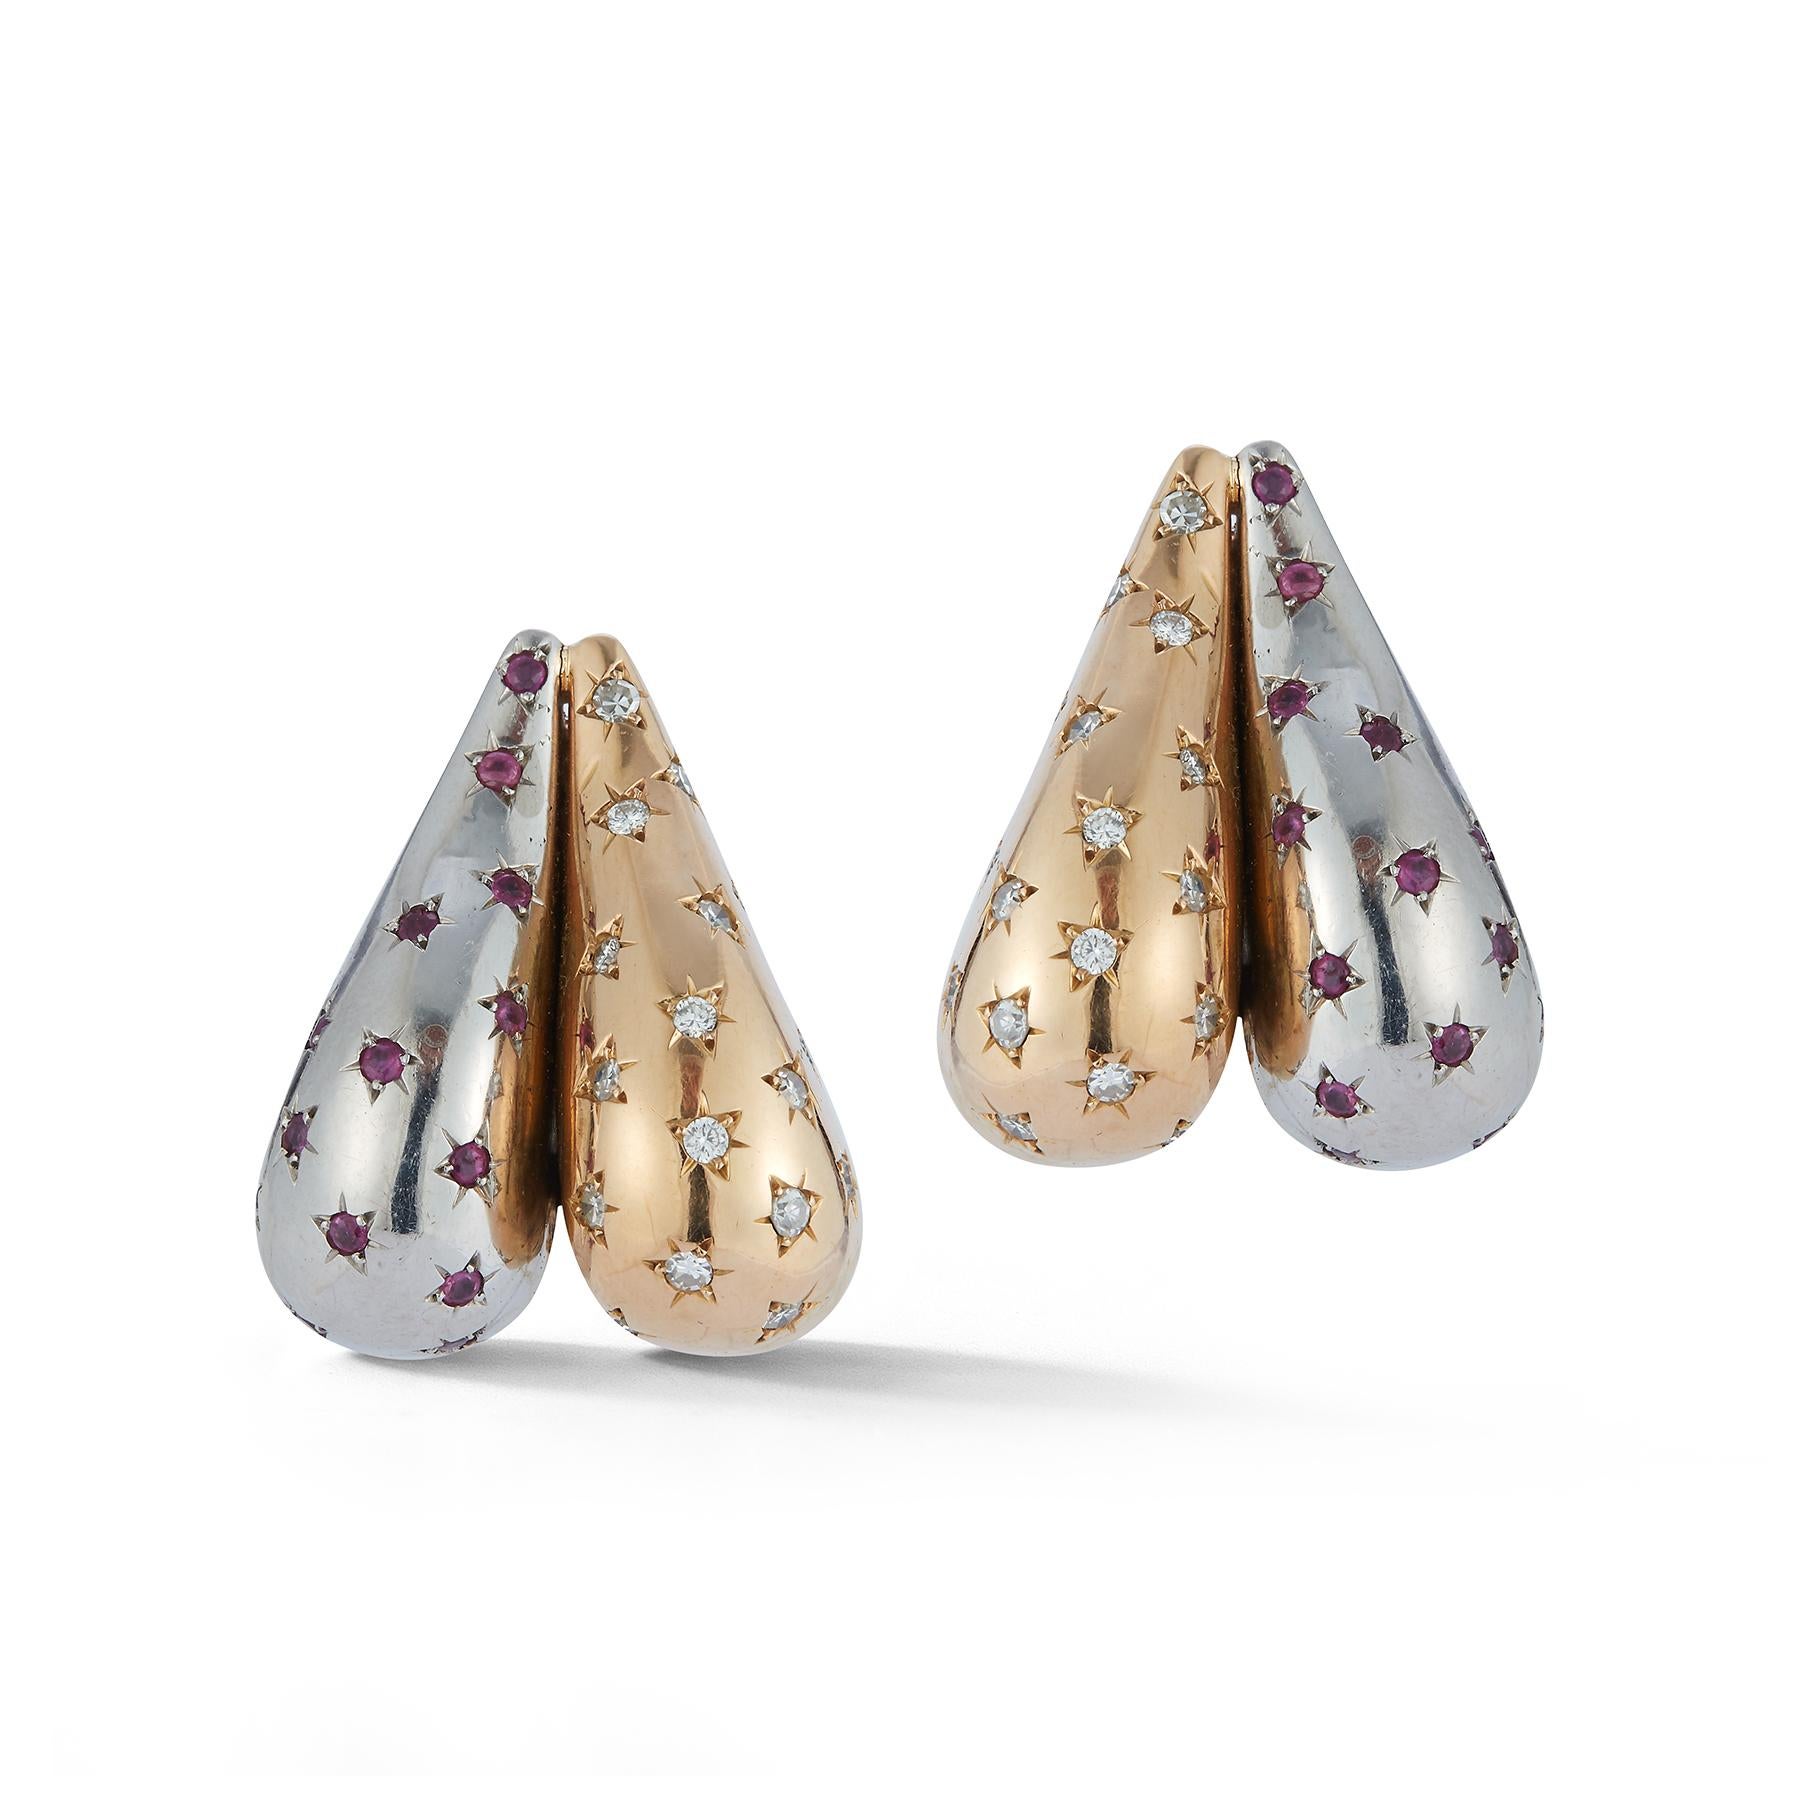 Ruby & Diamond Two Tone Retro Heart Earrings

Diamond Weight: approximately .85 cts

Ruby Weight: approximately .80 cts 

Measurements: 1.25